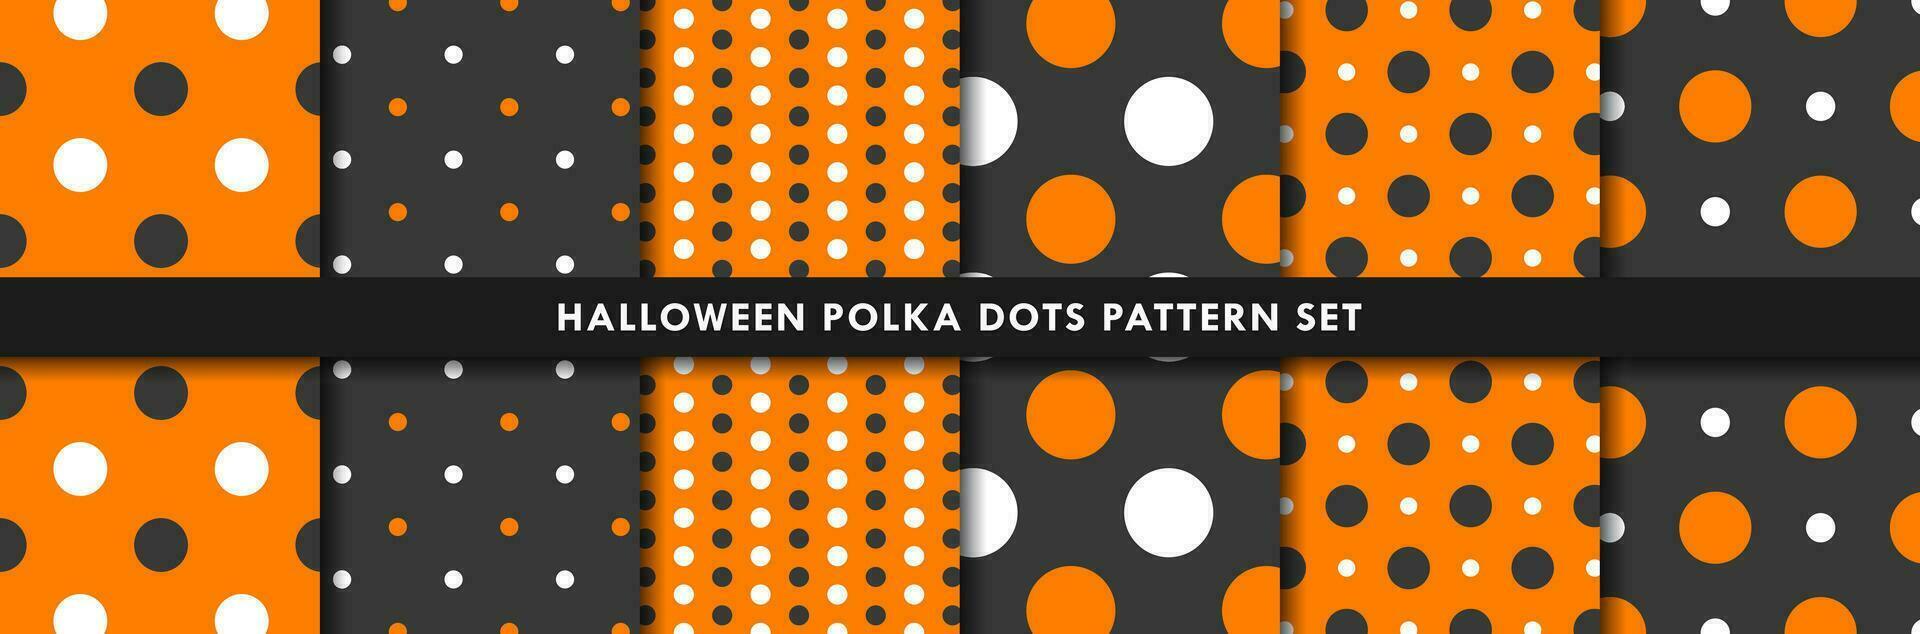 Halloween Polka Dot Pattern Background Set vector